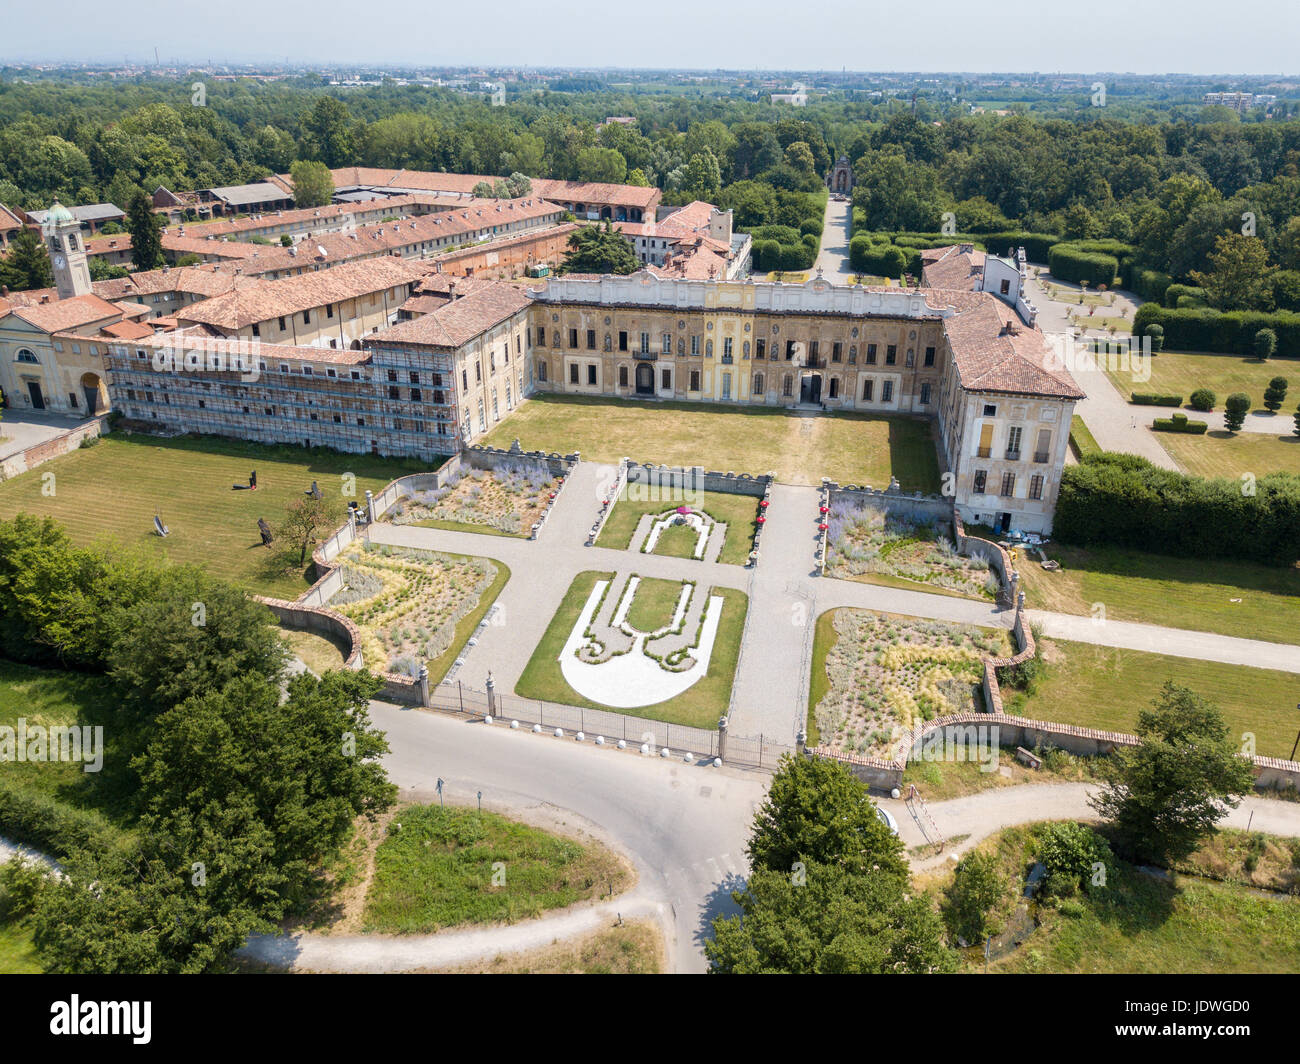 Villa Arconati, Castellazzo, Bollate, Mailand, Italien. Luftaufnahme der Villa Arconati 21.06.2017. Gärten und Parks, Groane Park. Palast, Barock pal Stockfoto